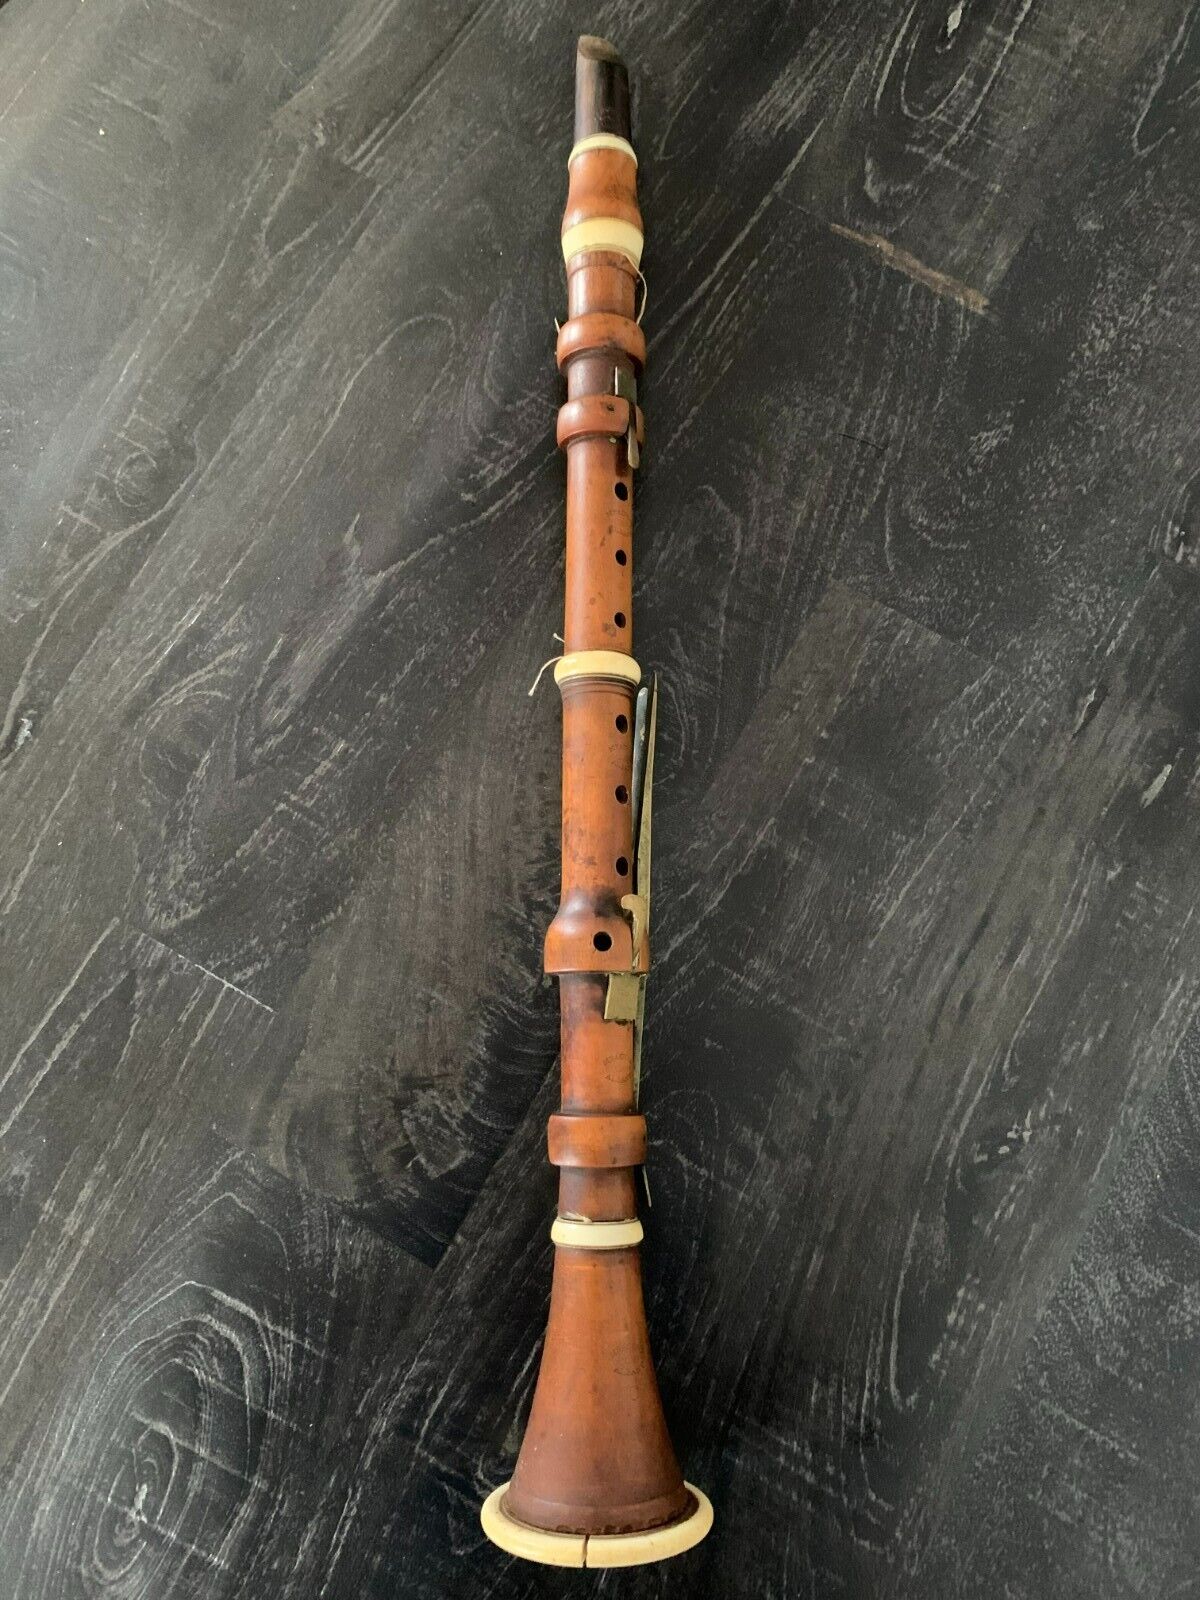 Meacham & Company Bone Mounted Boxwood "c" Clarinet From The Early 19th Century